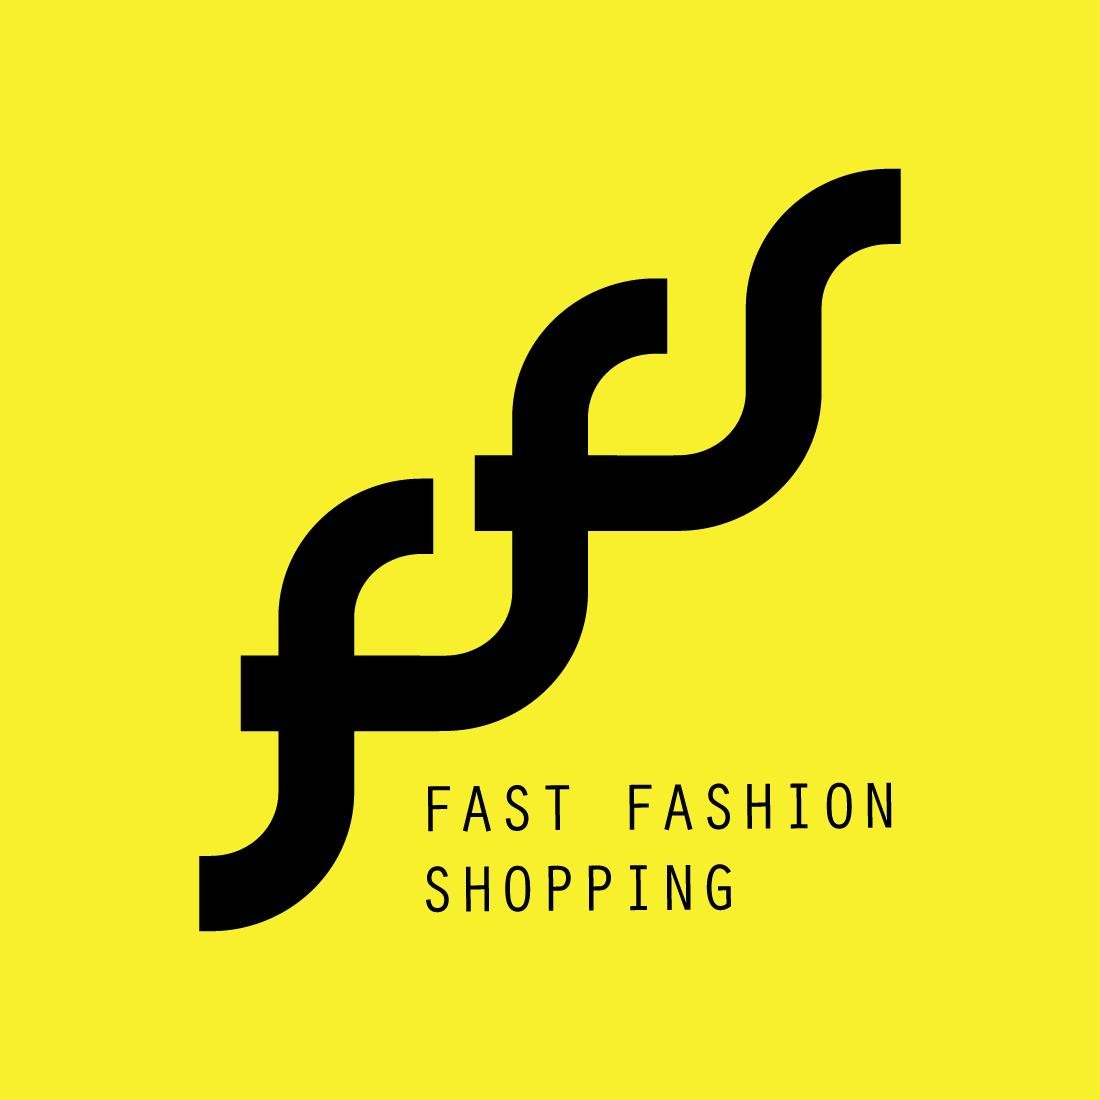 A maior loja de fast fashion do Brasil.